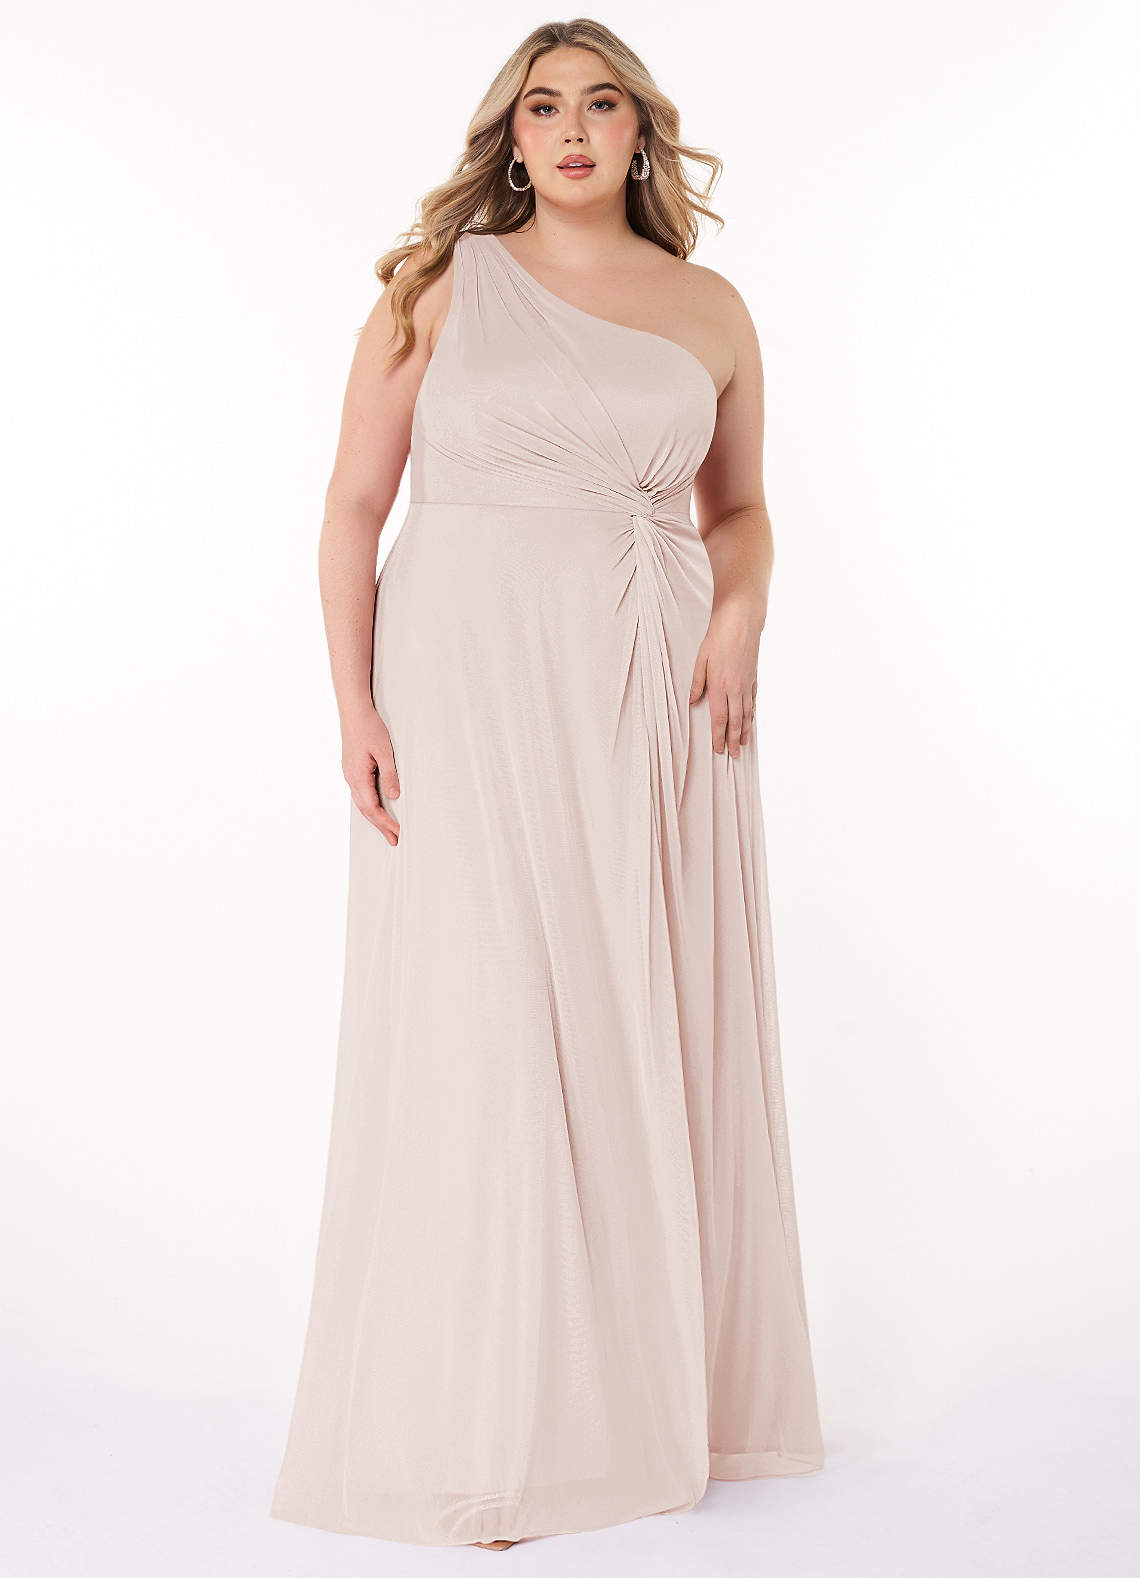 Azazie Brooke Bridesmaid Dresses A-Line One Shoulder Mesh Floor-Length Dress image1